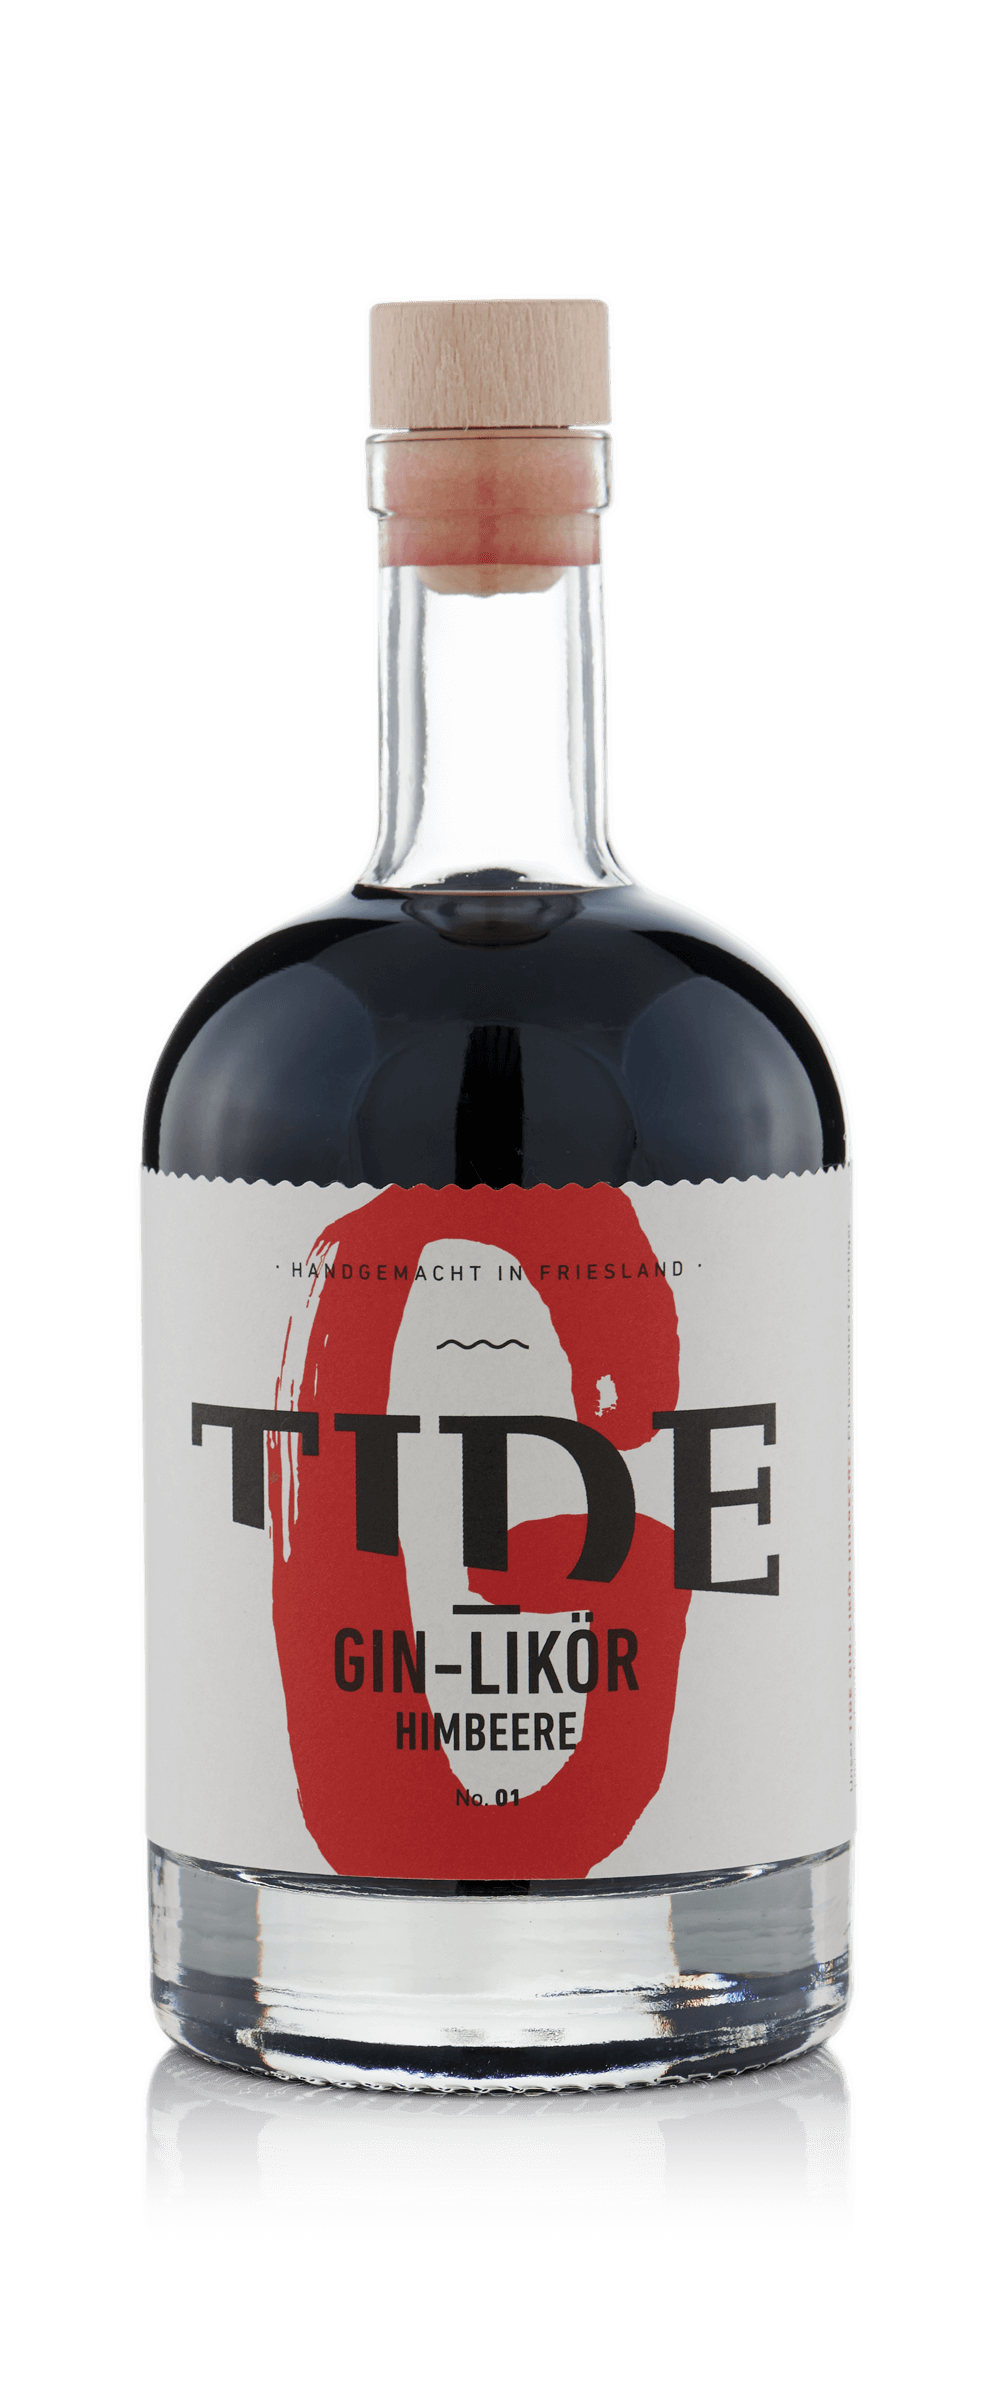 TIDE Gin-Likör Himbeere